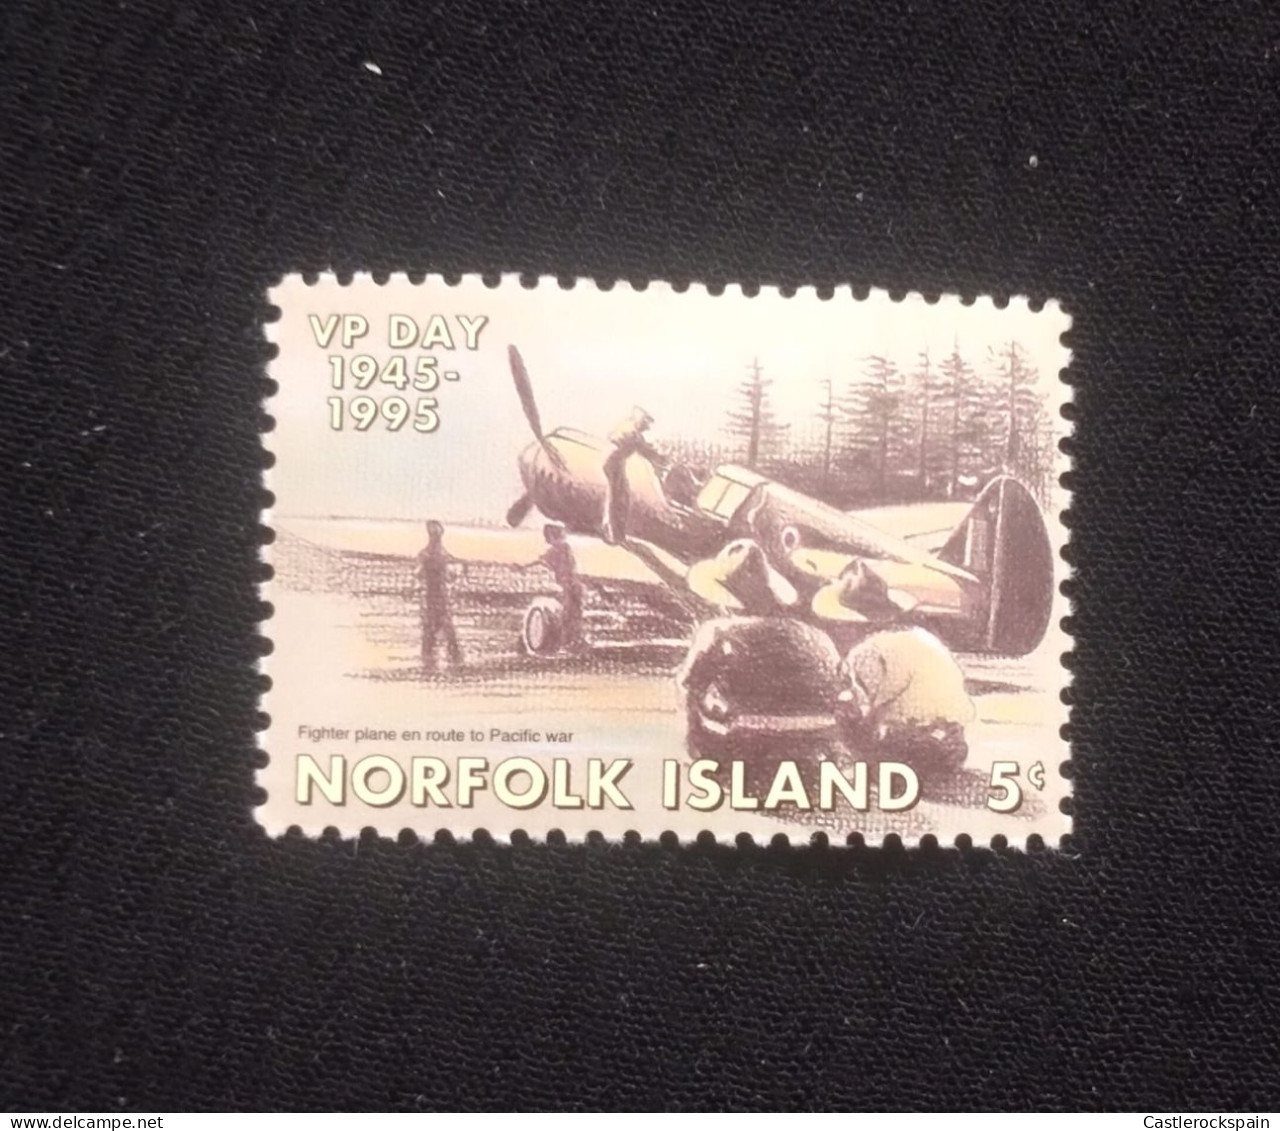 O) 1995 NORFOLK ISLAND, VP DAY,  FIGHTER PLANE EN ROUTE TO PACIFIC WAR, MNH - Isla Norfolk